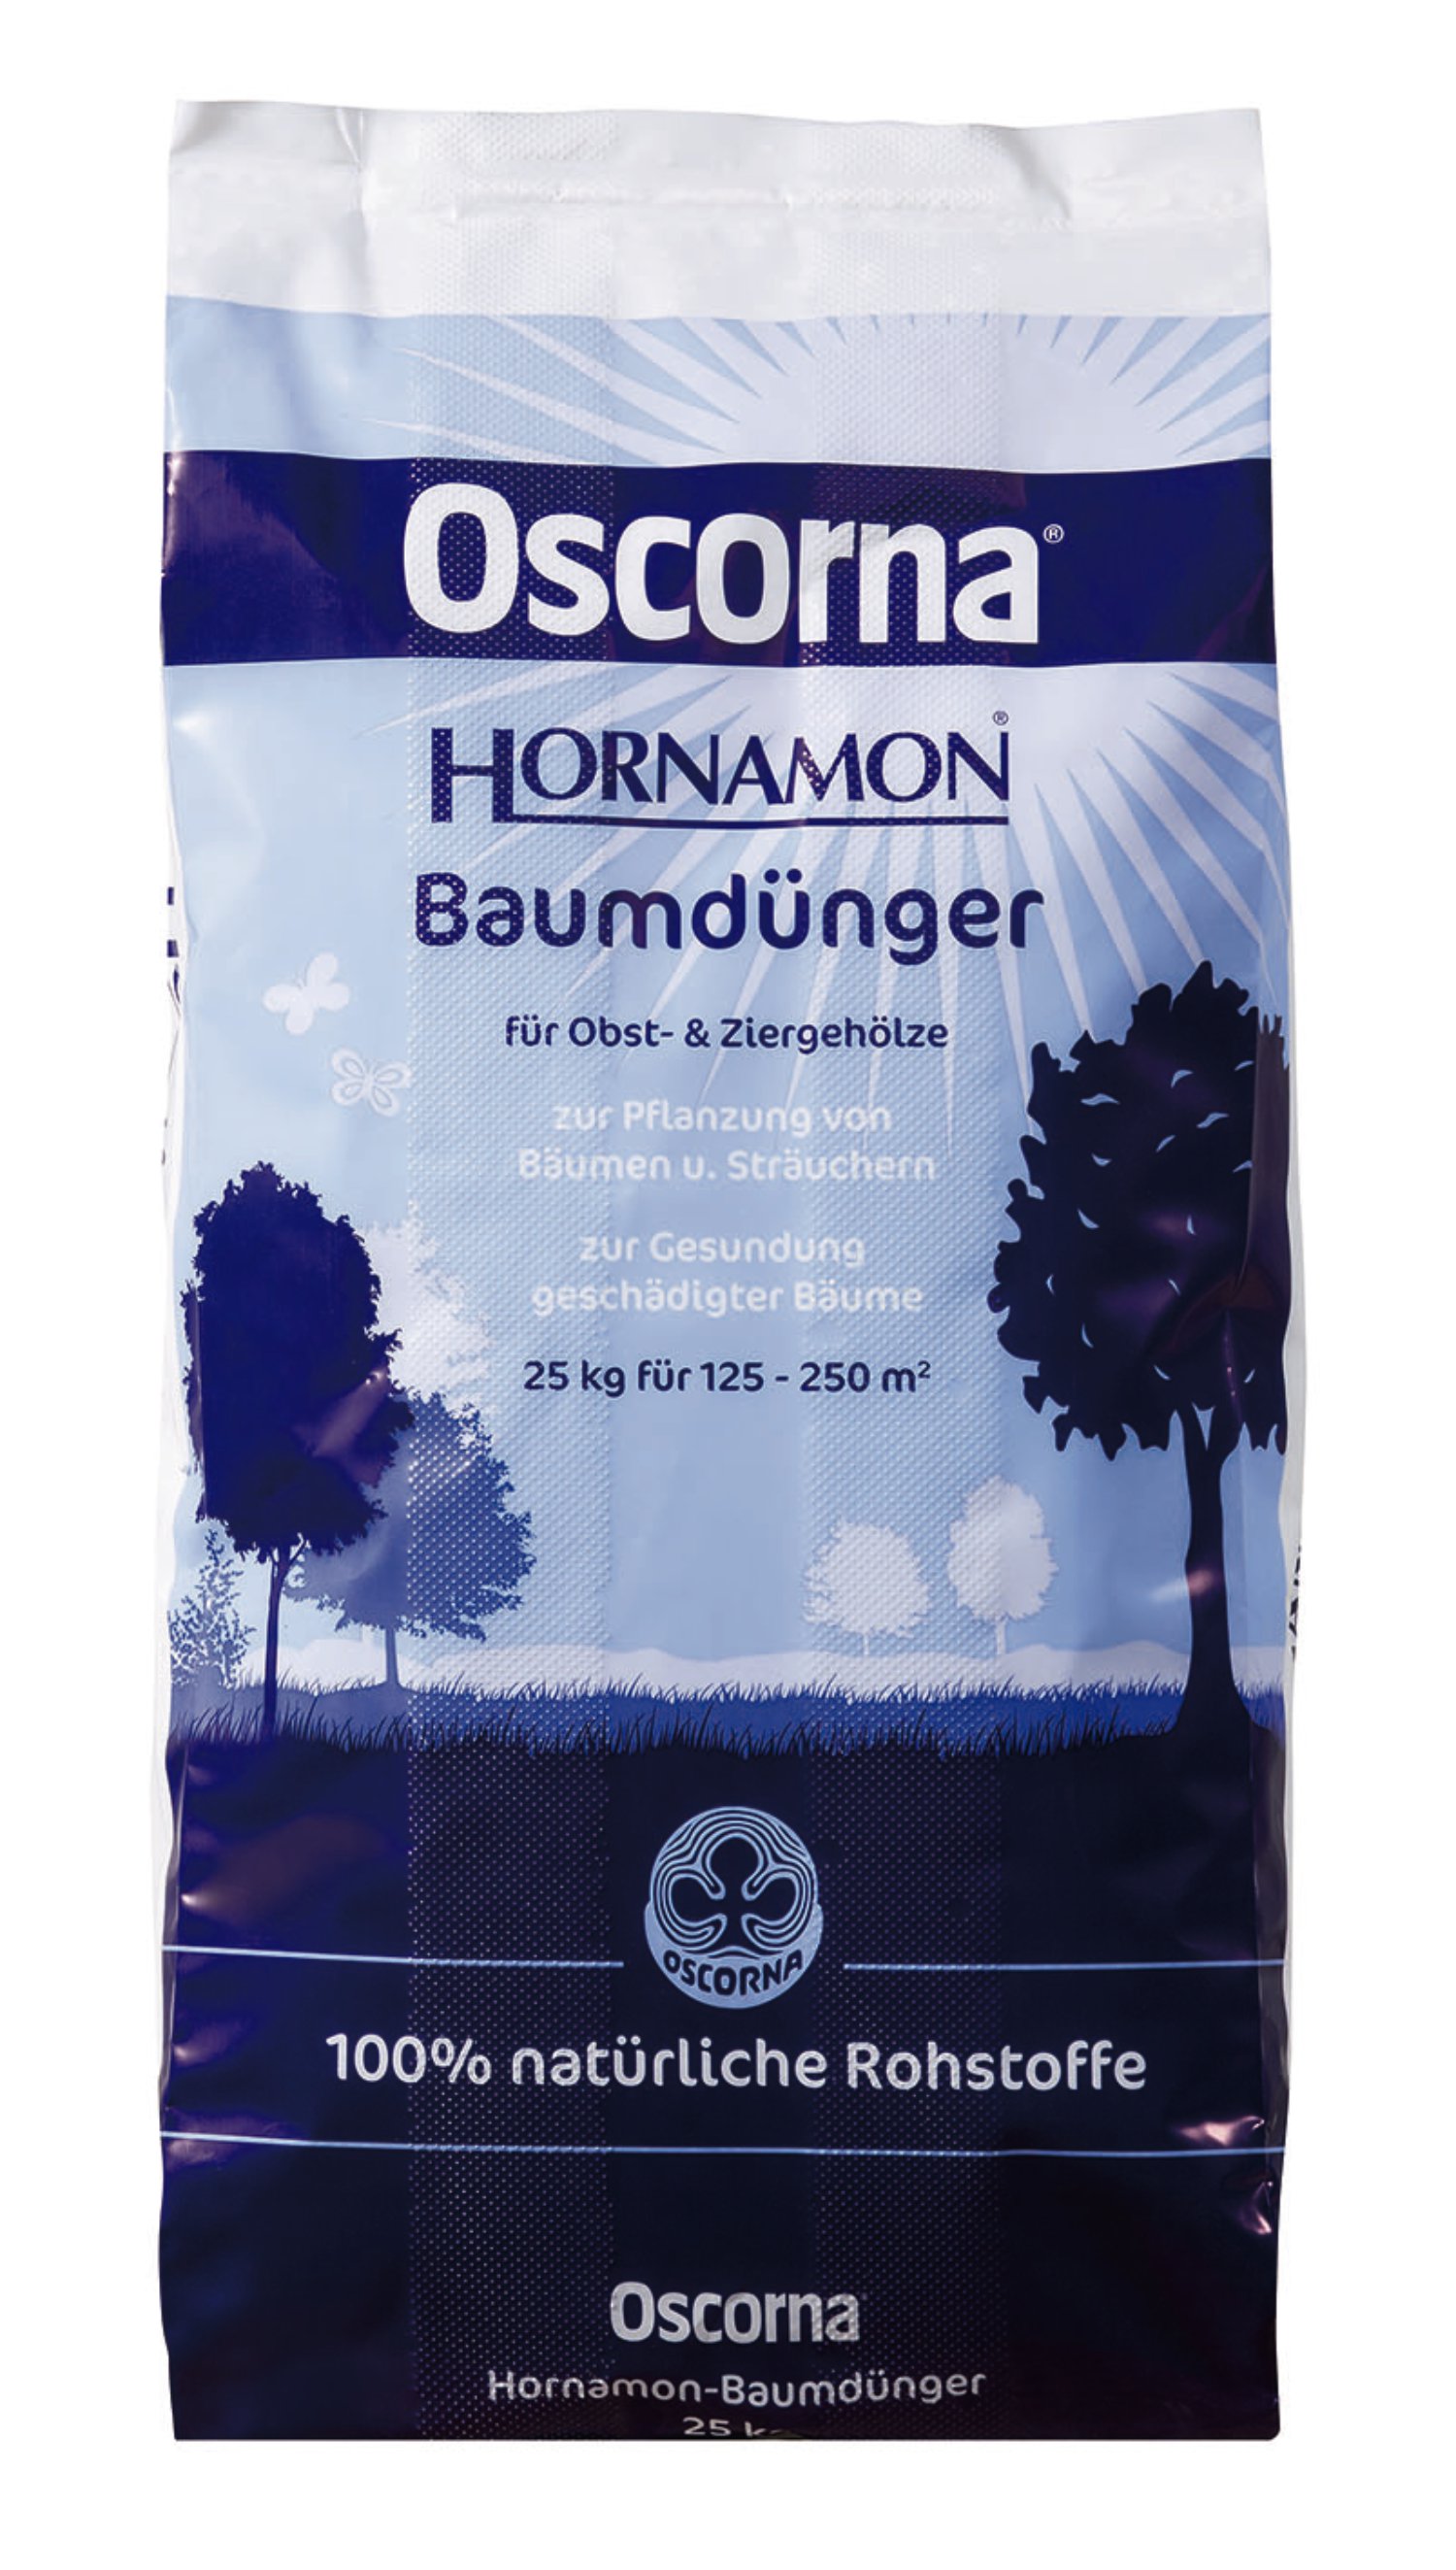 OSCORNA Baumdünger Hornamon 25 kg